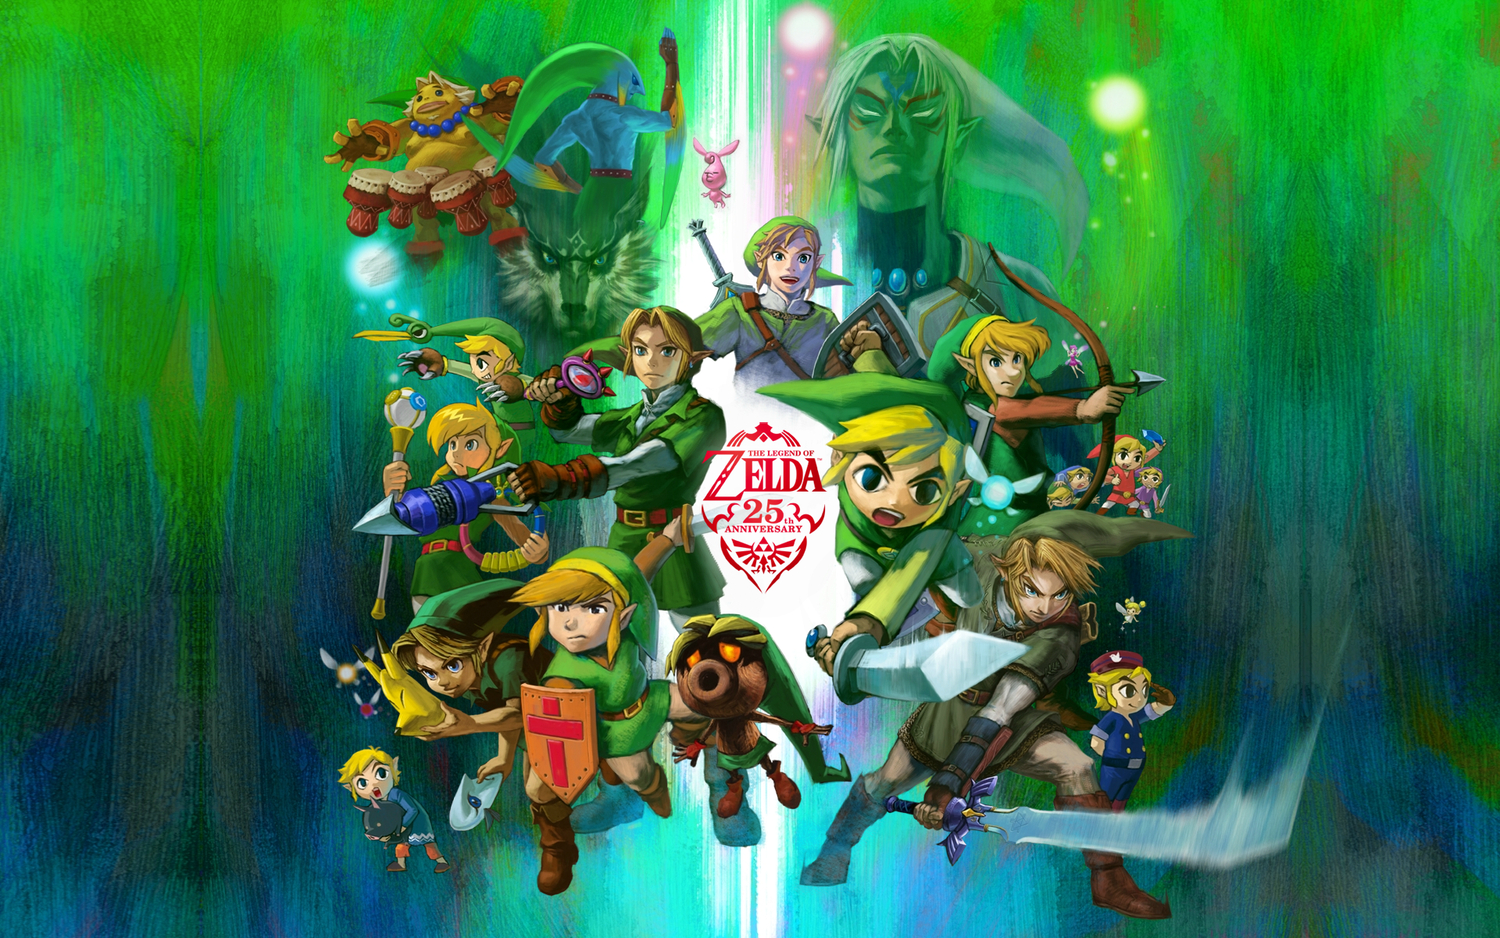 Amazing The Legend Of Zelda Pictures & Backgrounds